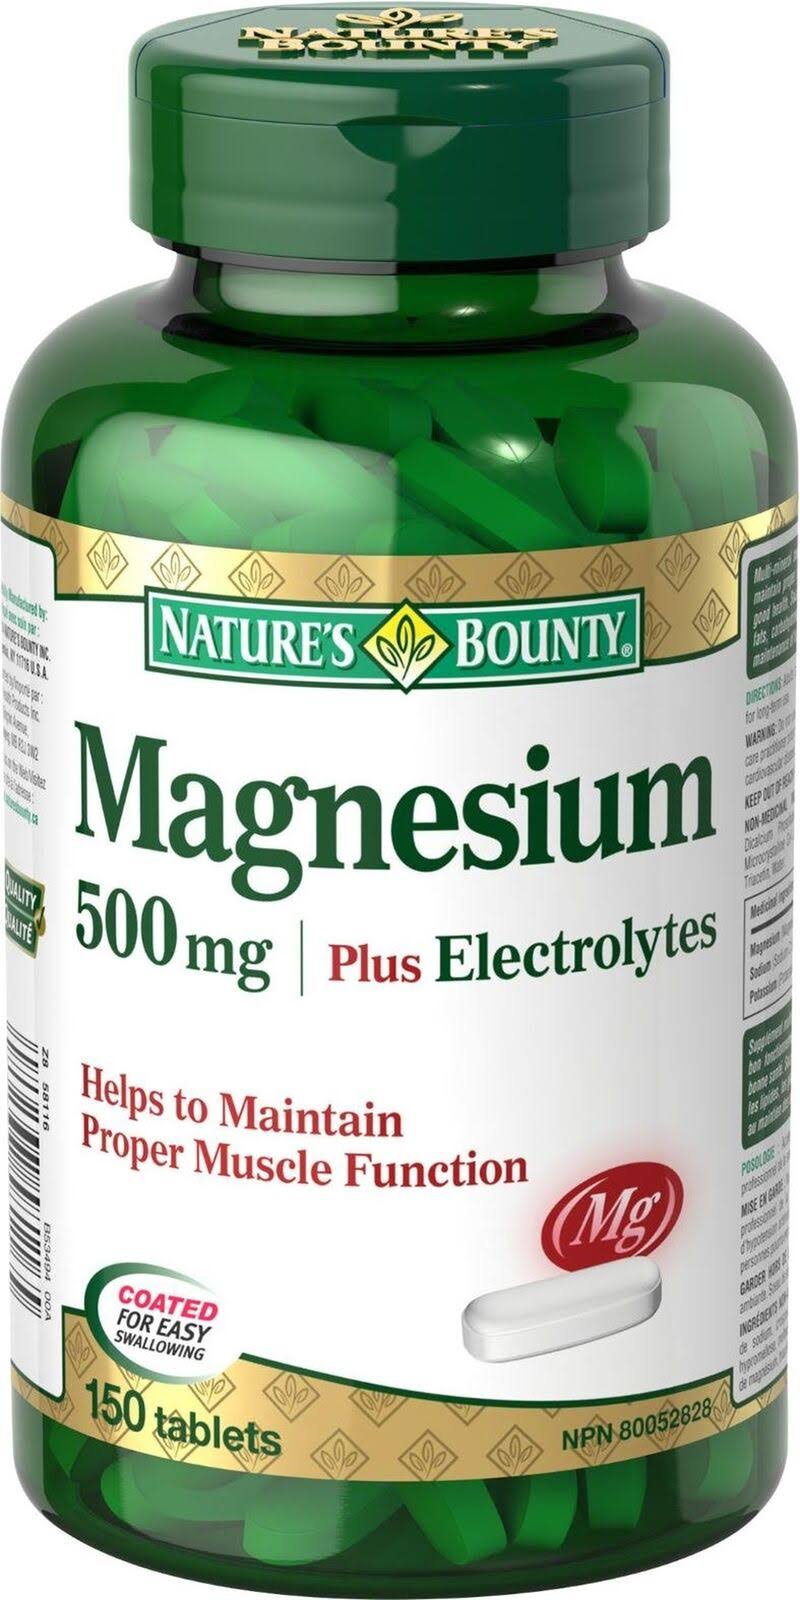 Nature's Bounty Magnesium Plus Electrolytes Supplement - 150ct